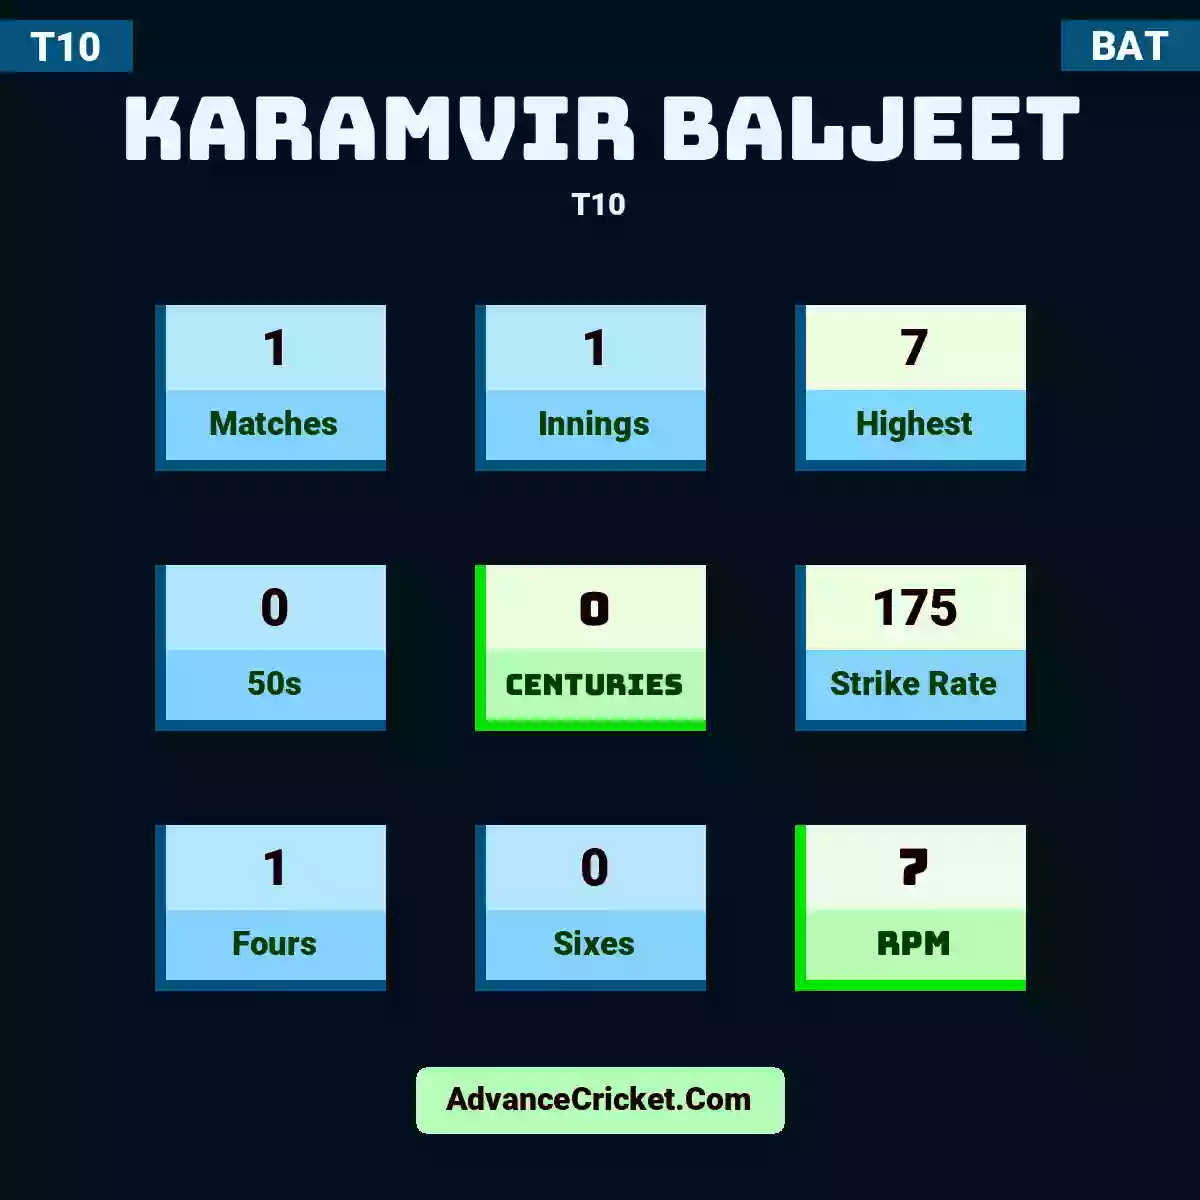 Karamvir Baljeet T10 , Karamvir Baljeet played 1 matches, scored 7 runs as highest, 0 half-centuries, and 0 centuries, with a strike rate of 175. K.Baljeet hit 1 fours and 0 sixes, with an RPM of 7.